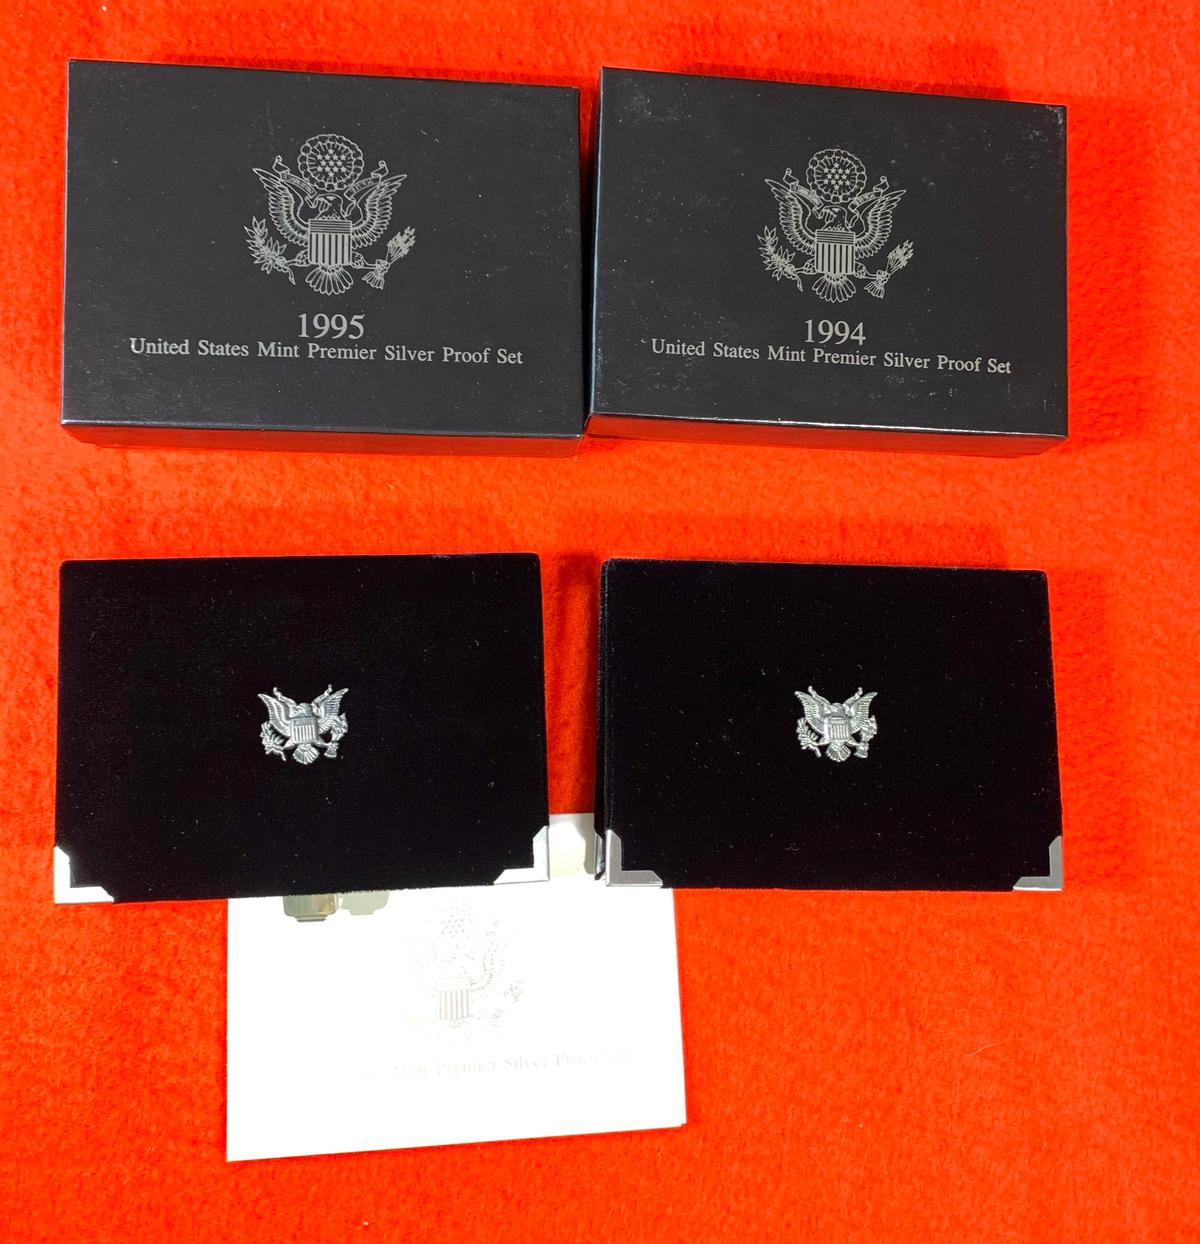 1994 & 1995 United States Mint Premier Silver Proof Sets